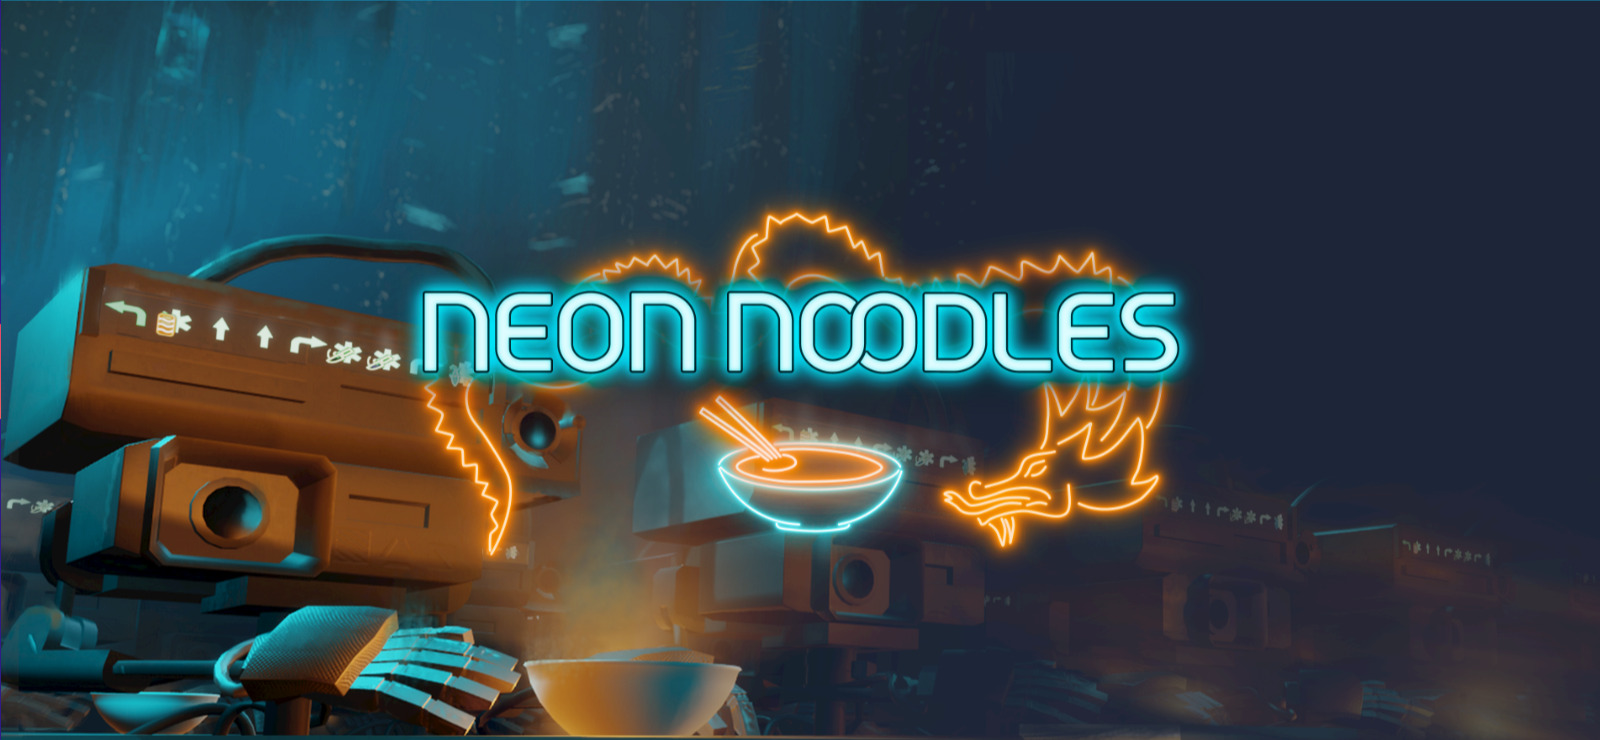 Neon noodles cyberpunk kitchen automation фото 2